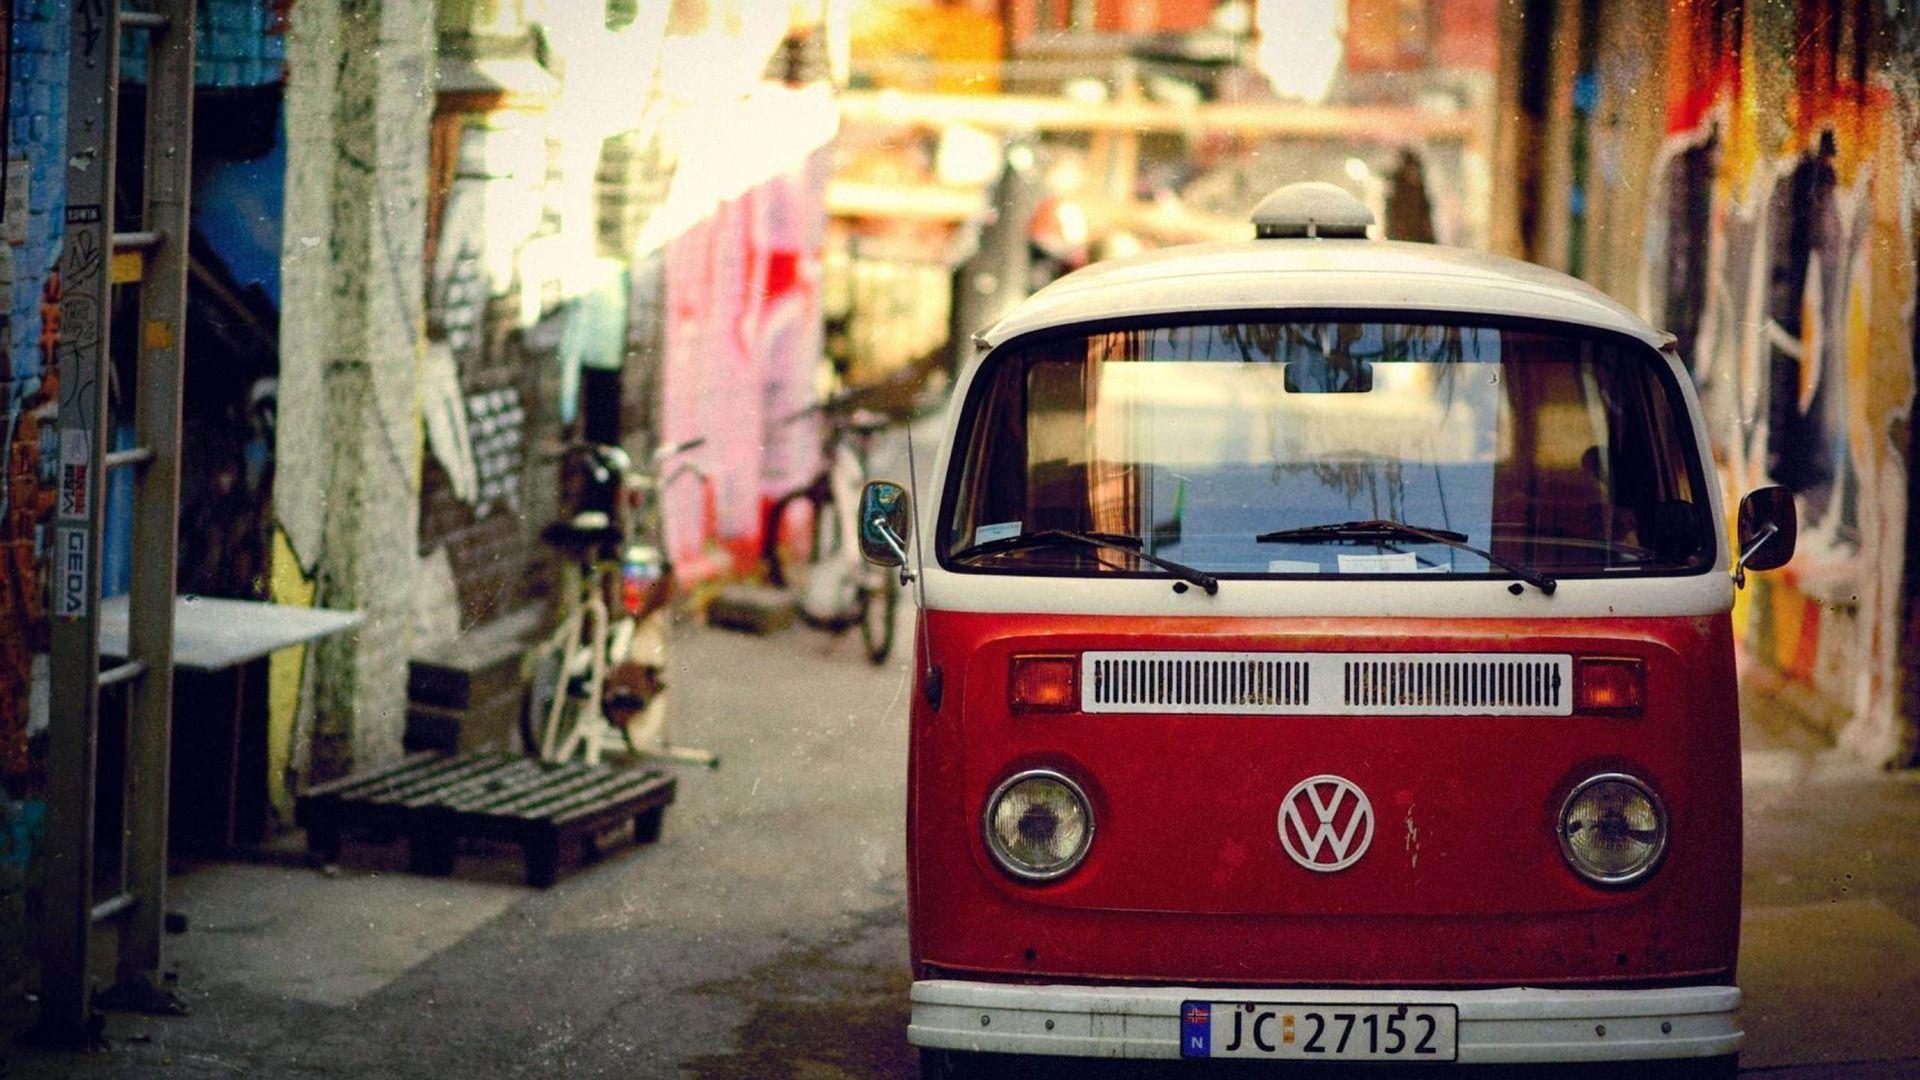 Volkswagen Bus Wallpaper Mobile #bHh. Cars